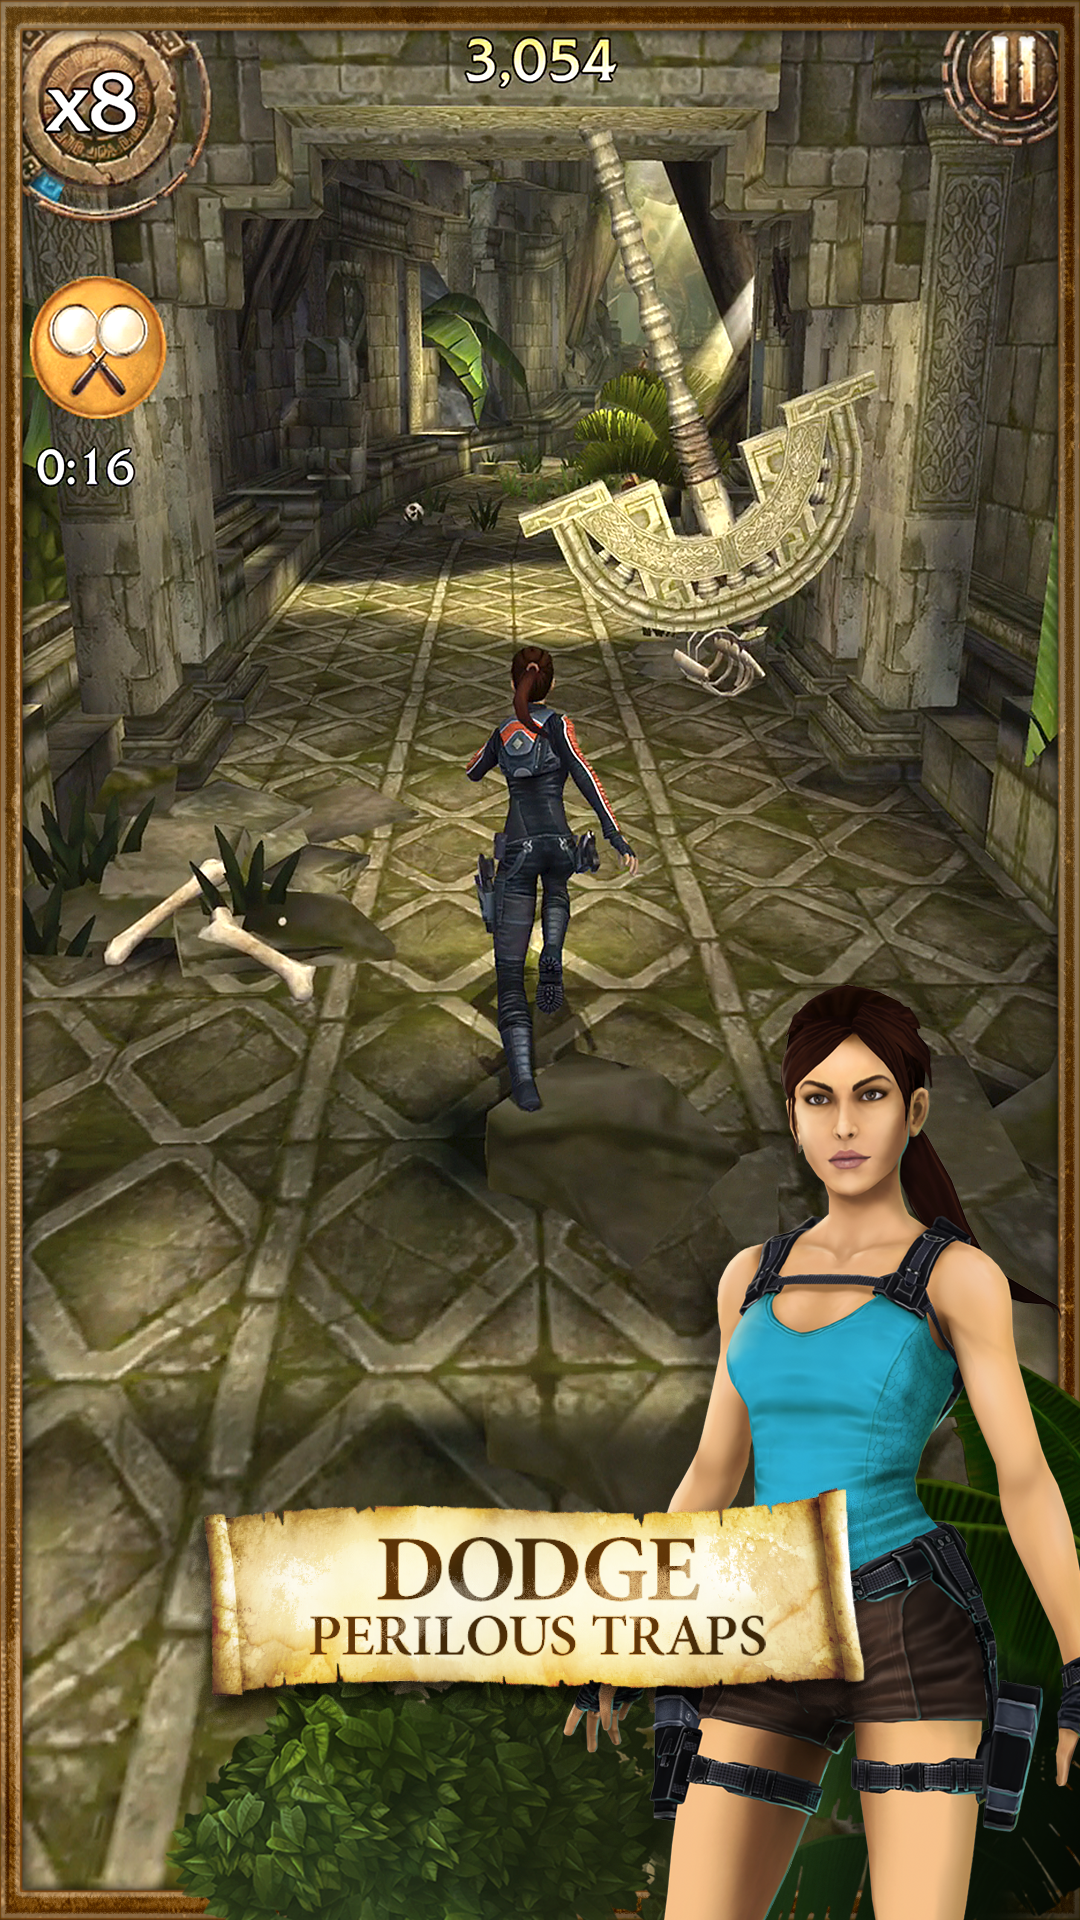 Lara Croft: Relic Runのキャプチャ